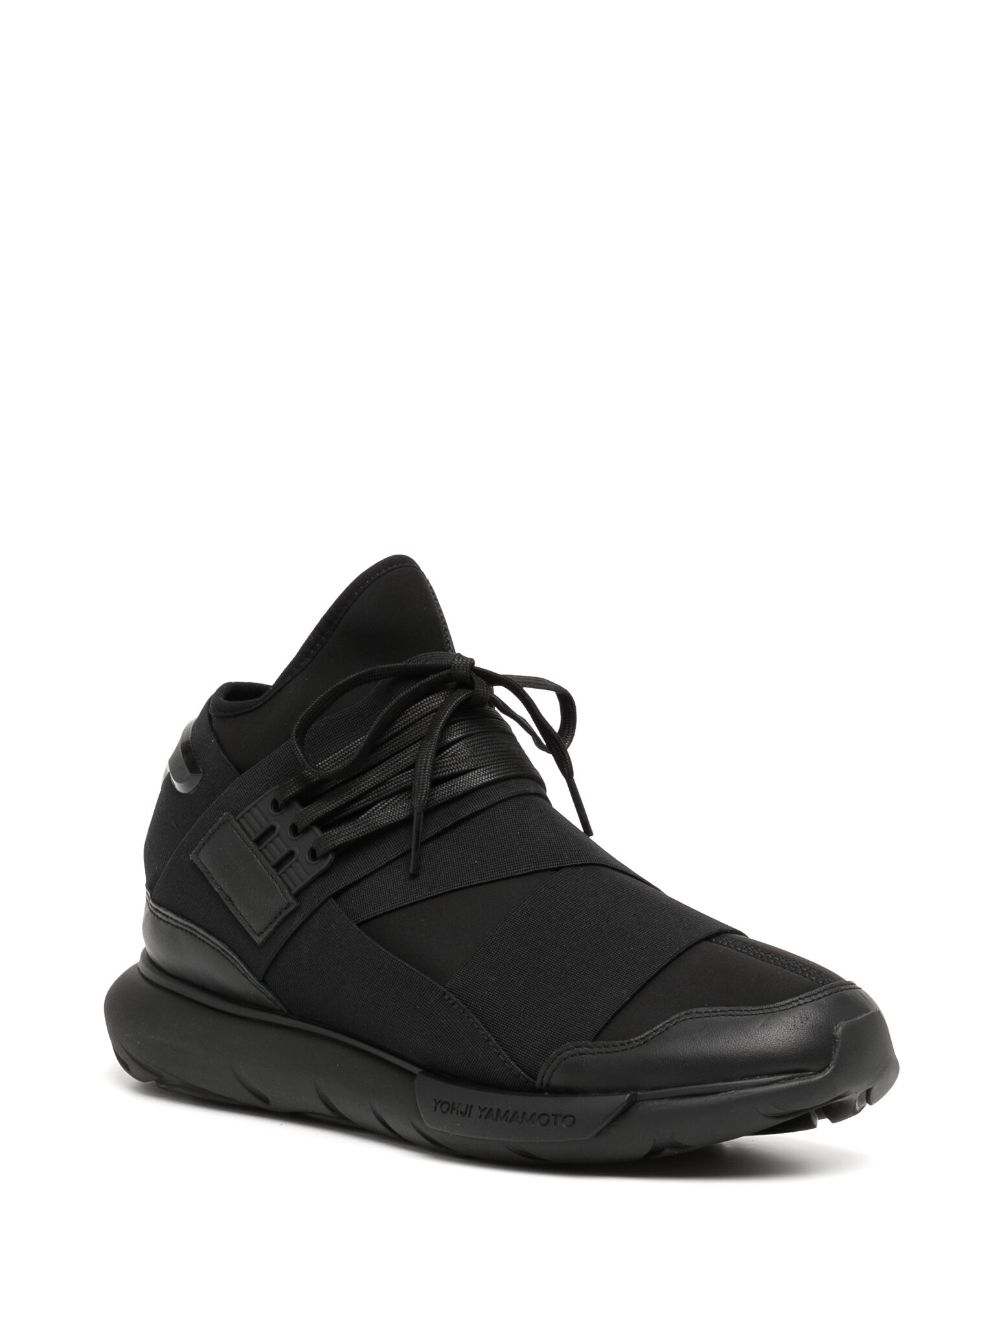 Y-3 Qasa High 'Triple Black' Sneakers - Farfetch